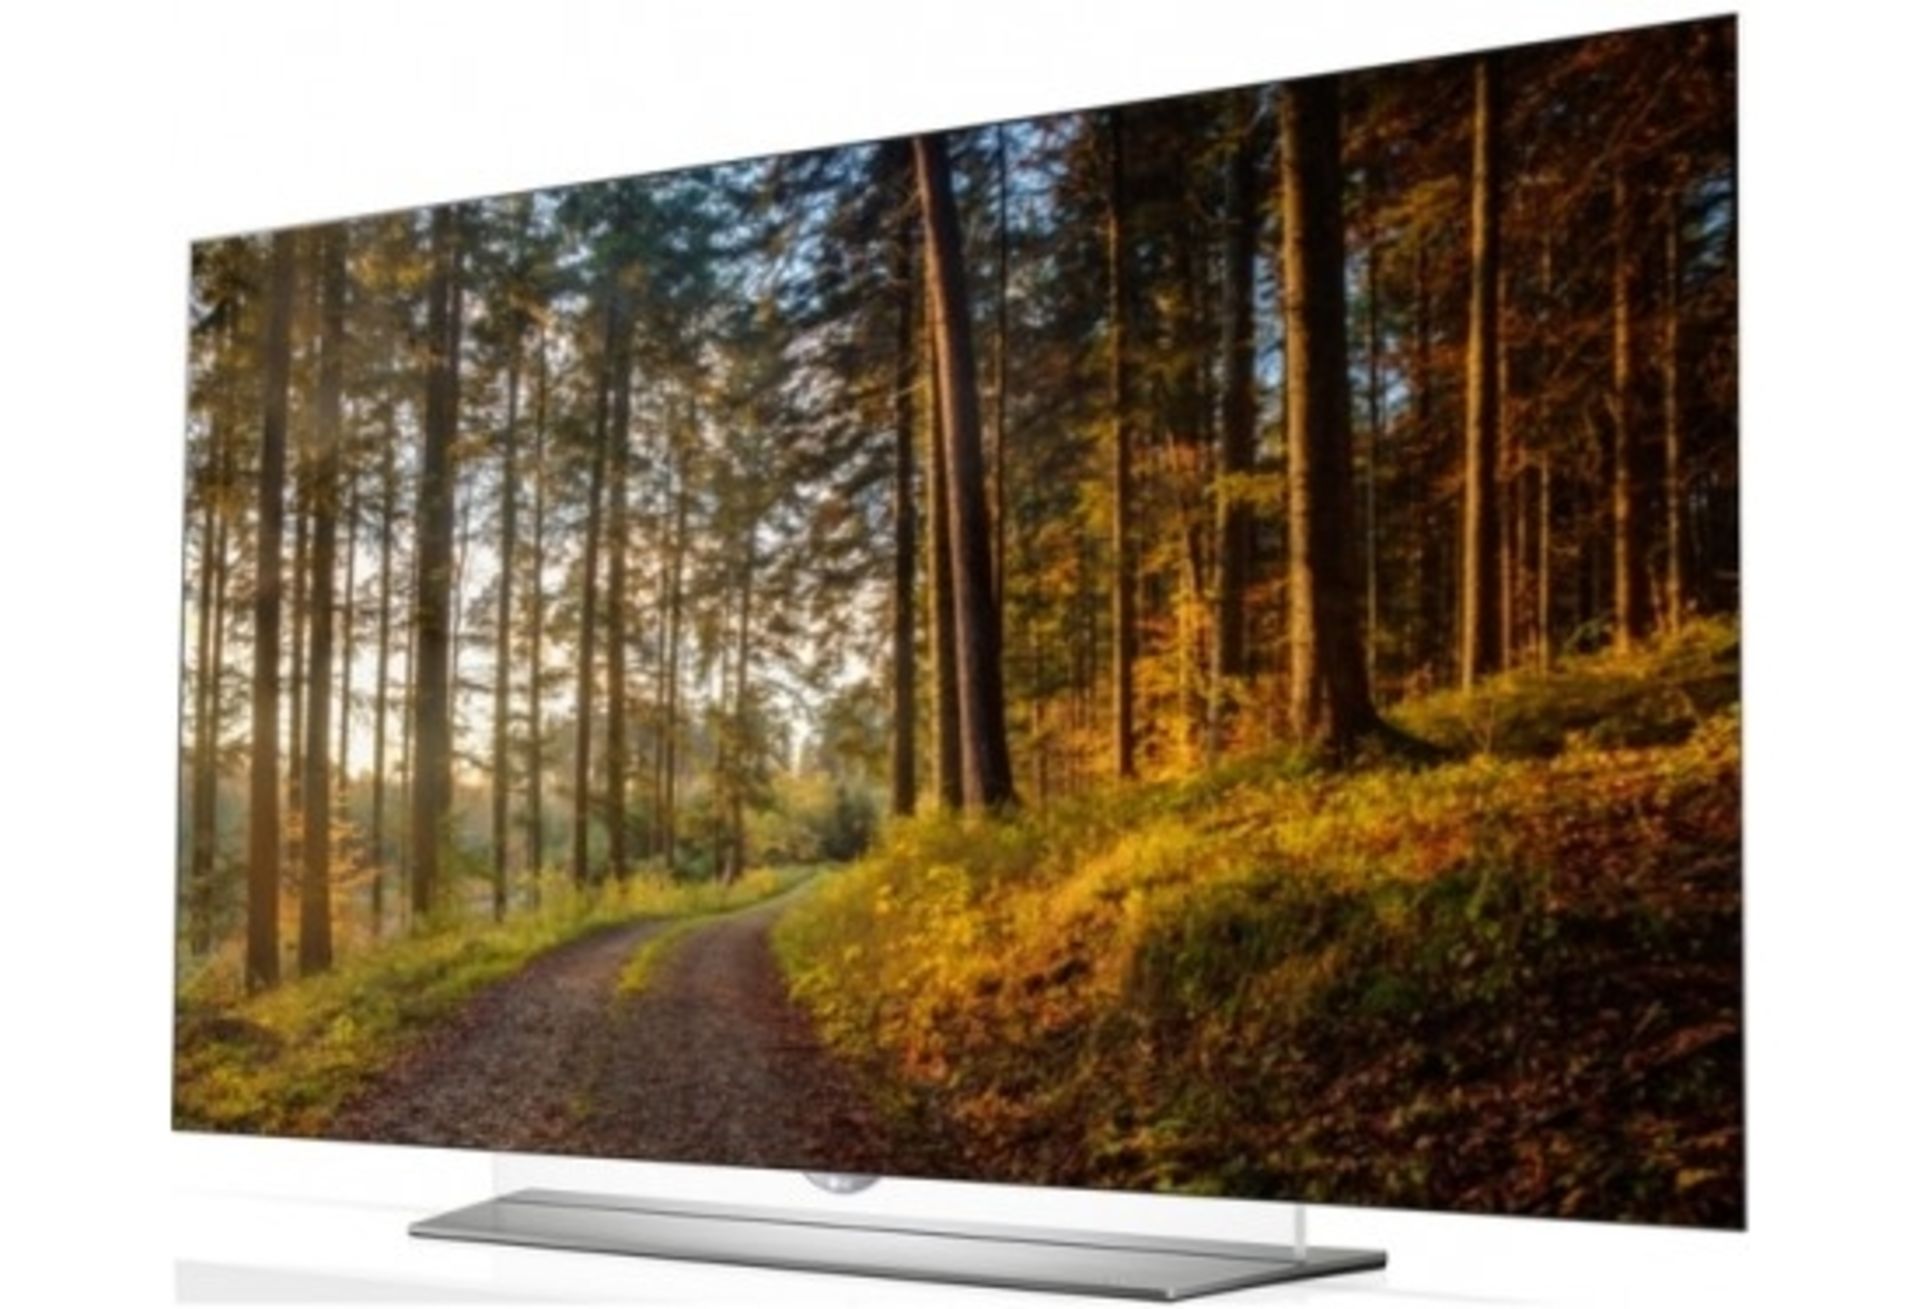 V Grade A 55" LG OLED 4K Ultra HD Smart 3D TV - Freeview HD - Wi-Fi - WEBOS 2.0 - ISP £2999.00 (